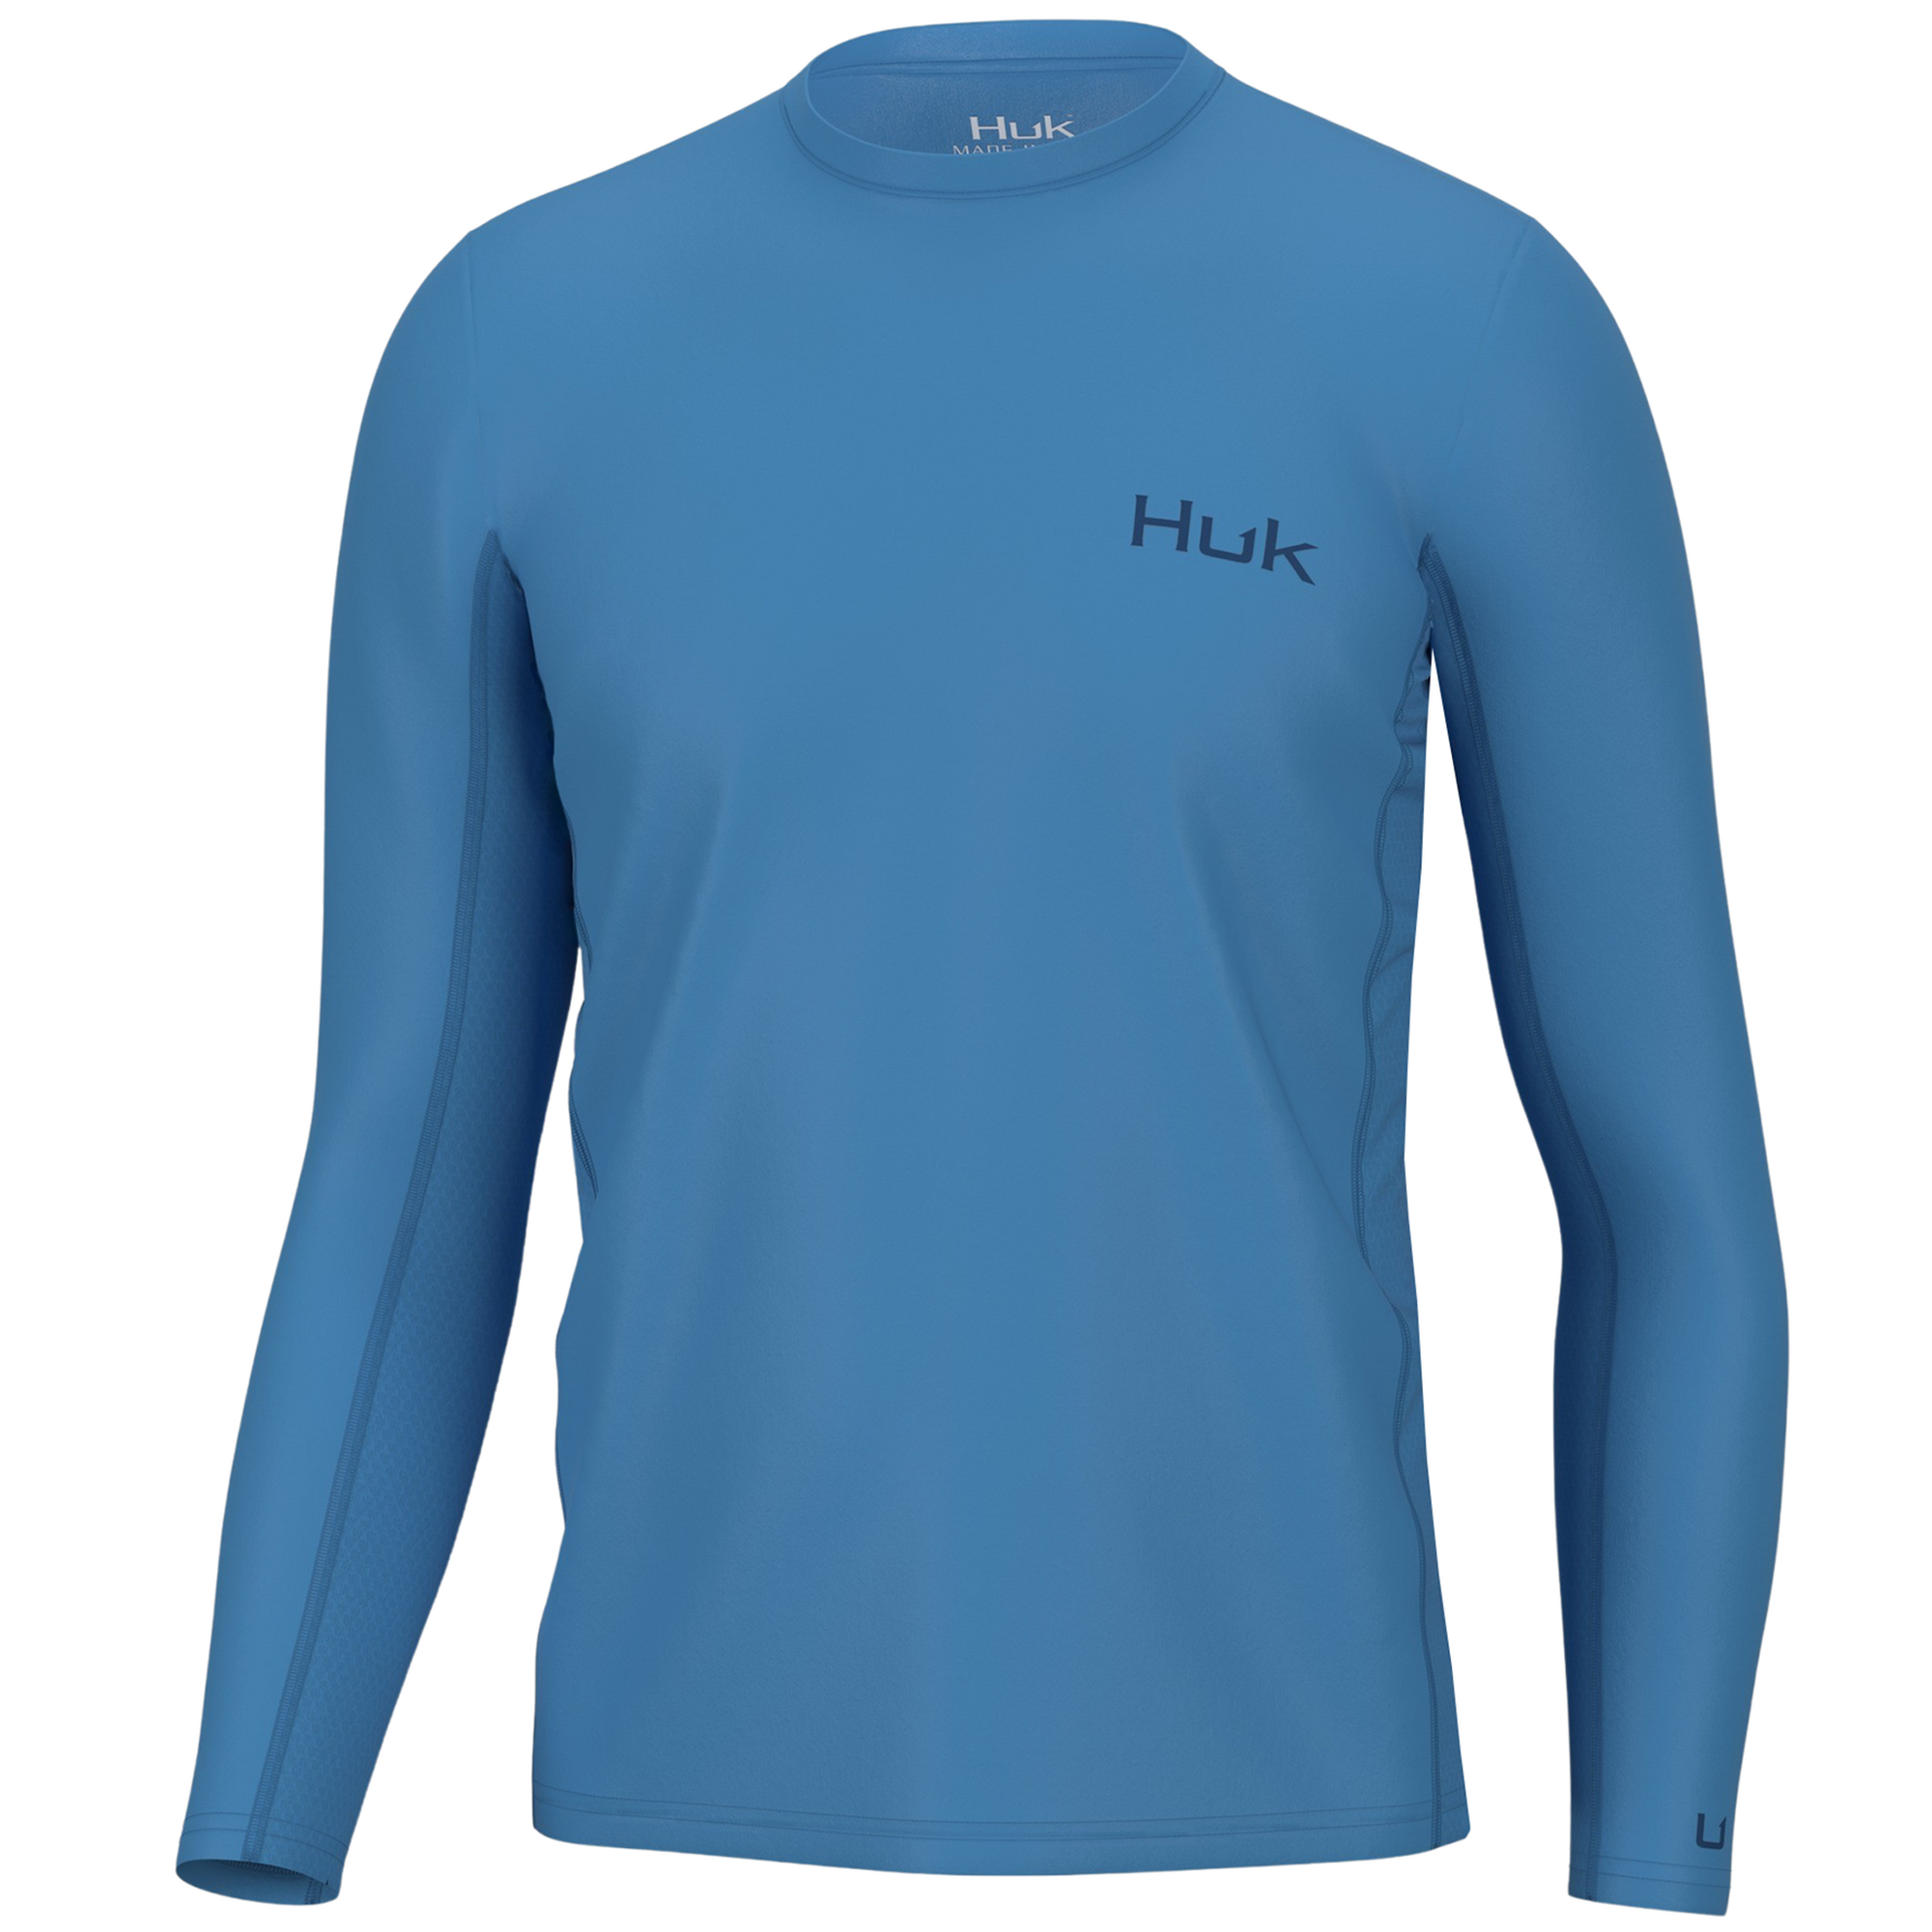 Huk Boys' Icon x Inside Reef Fade Long Sleeve Shirt, XL, Crystal Blue